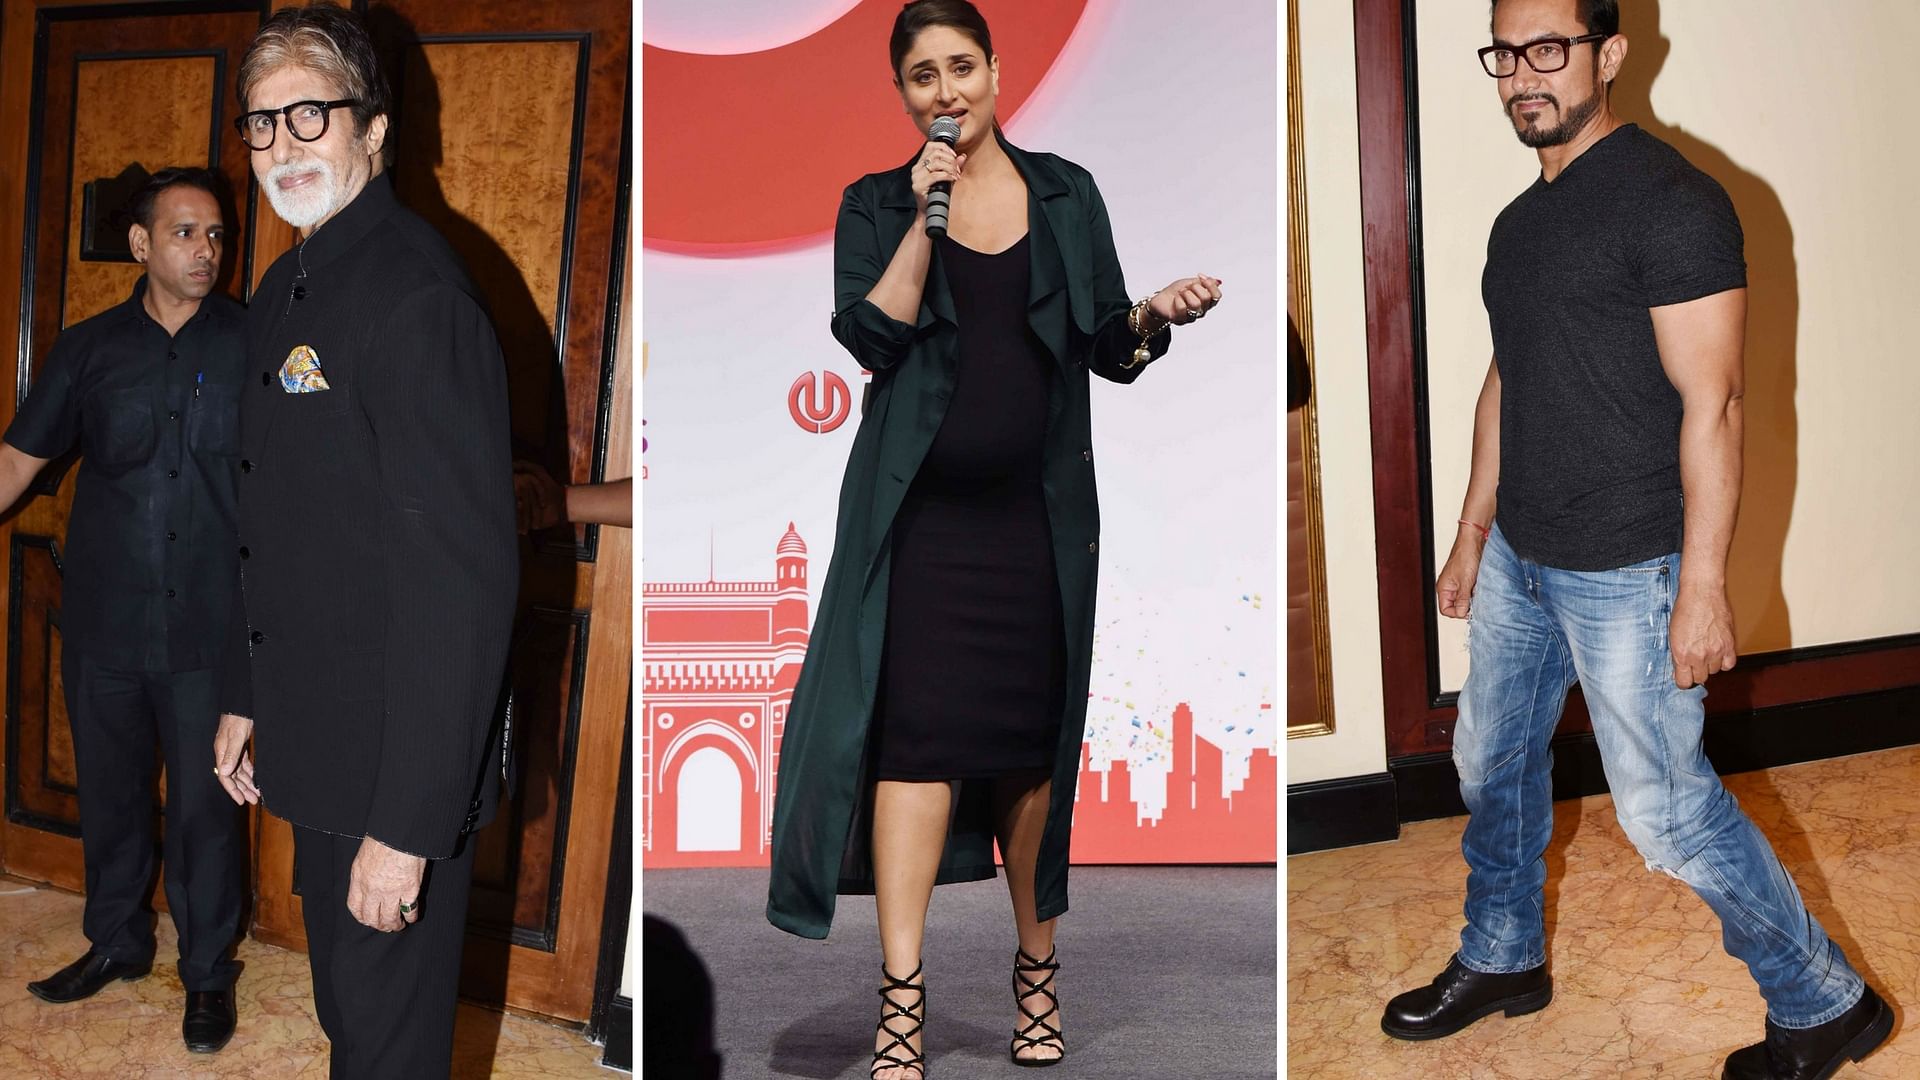 Amitabh Bachchan, Kareena Kapoor Khan and Aamir Khan at the event. (Photo: Yogen Shah)